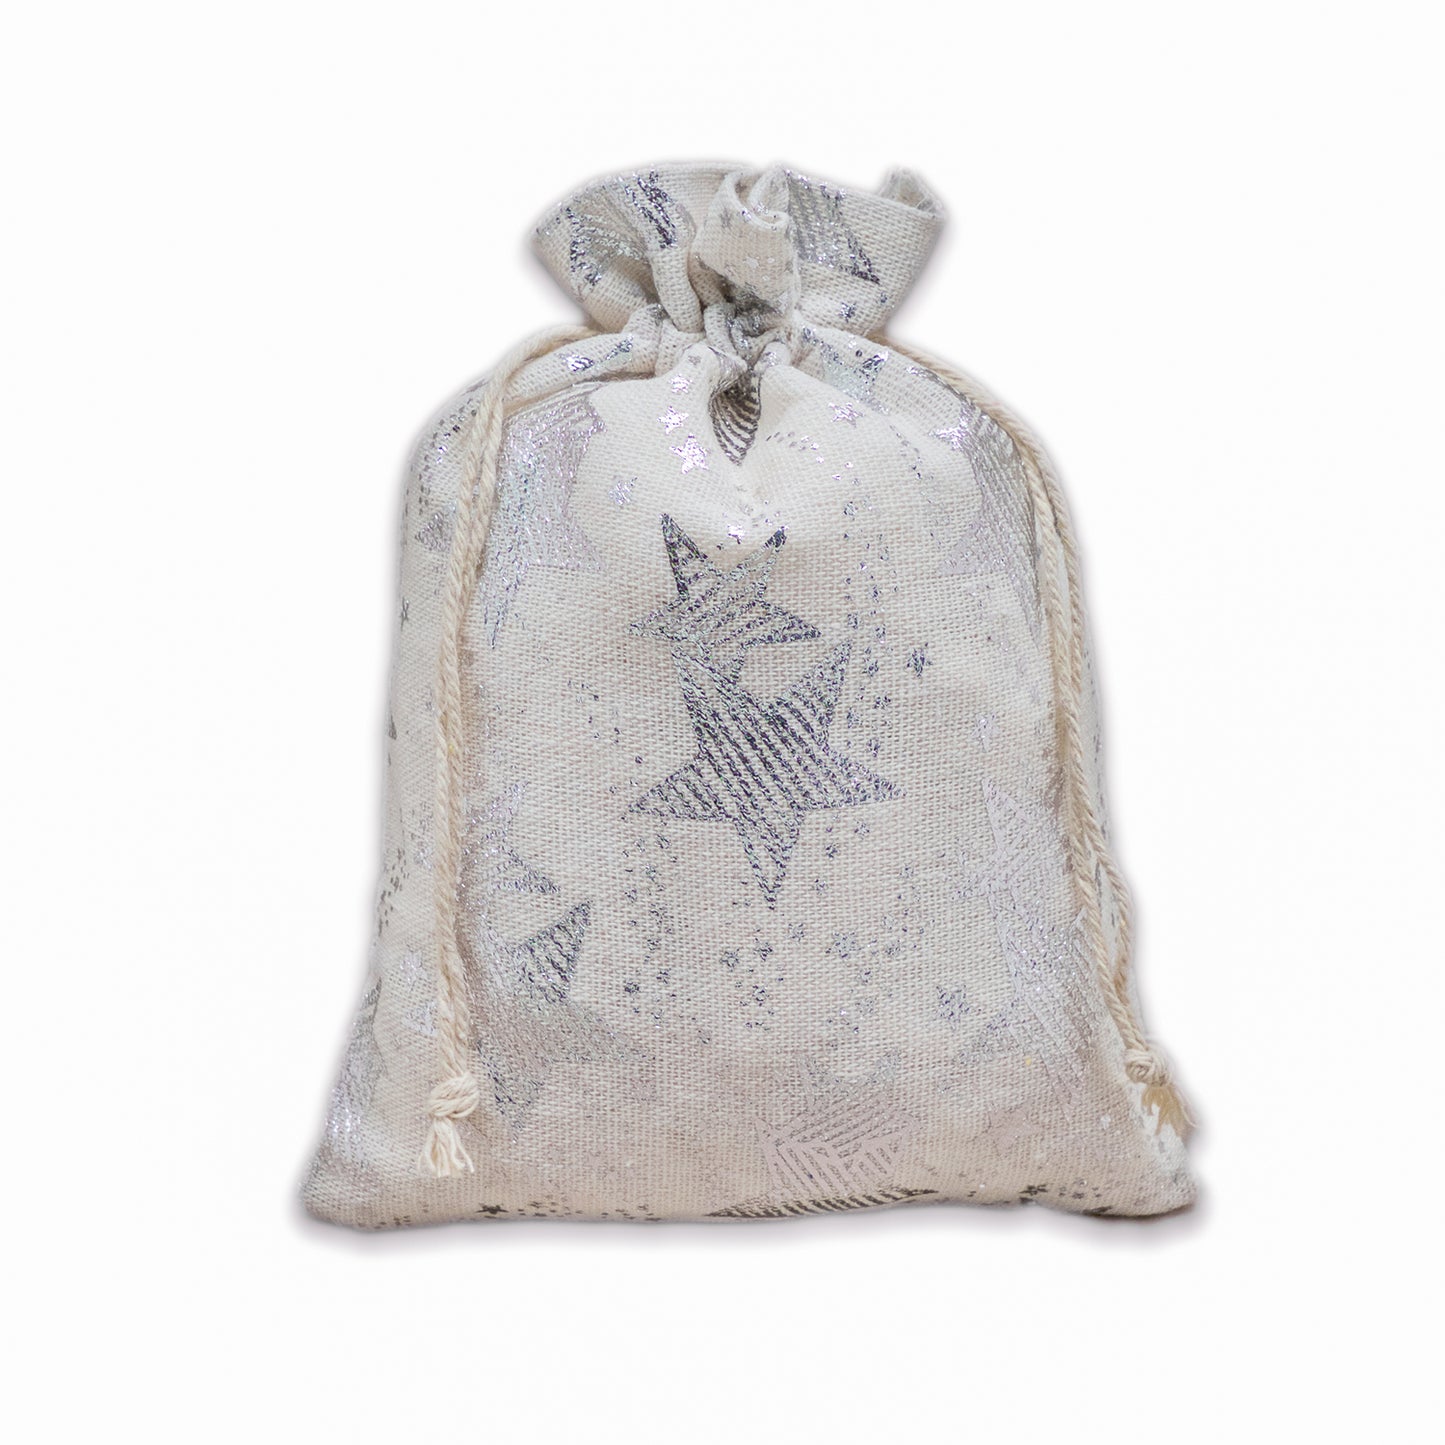 12" x 16" Cotton Muslin Silver Star Drawstring Gift Bags